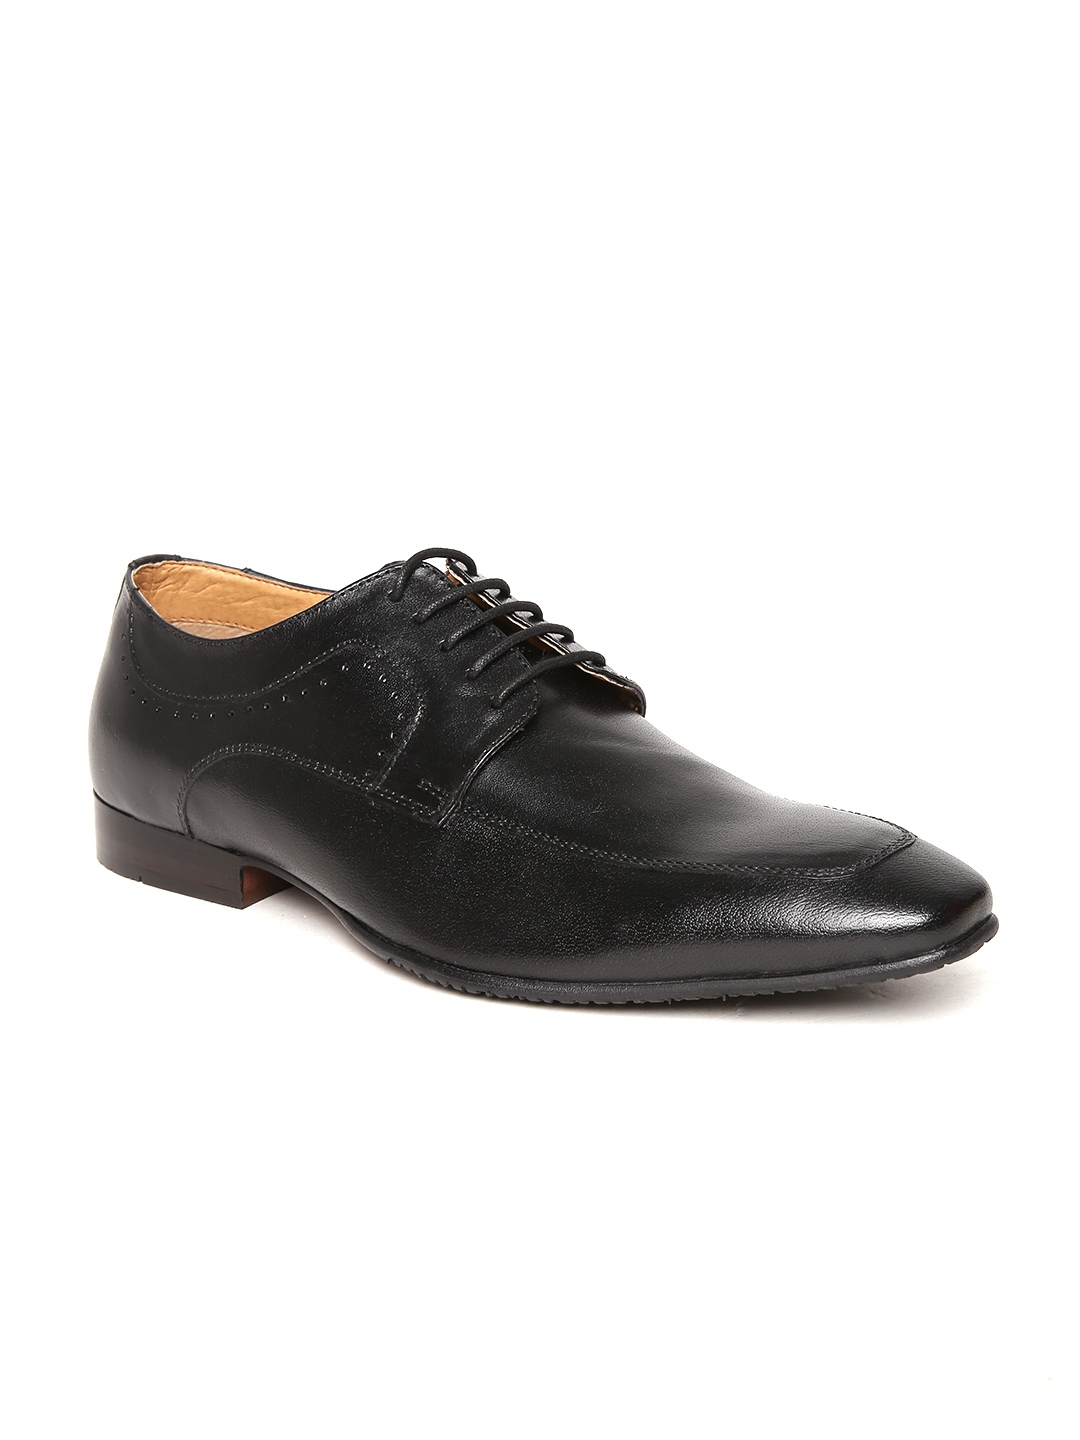 alberto torresi men's leather formal shoes